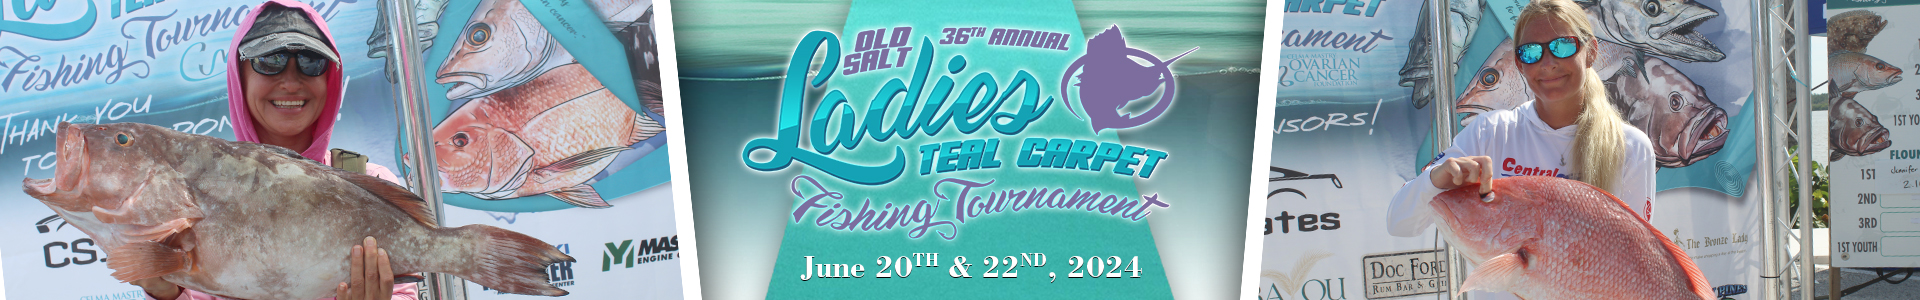 ladies fishing tournament